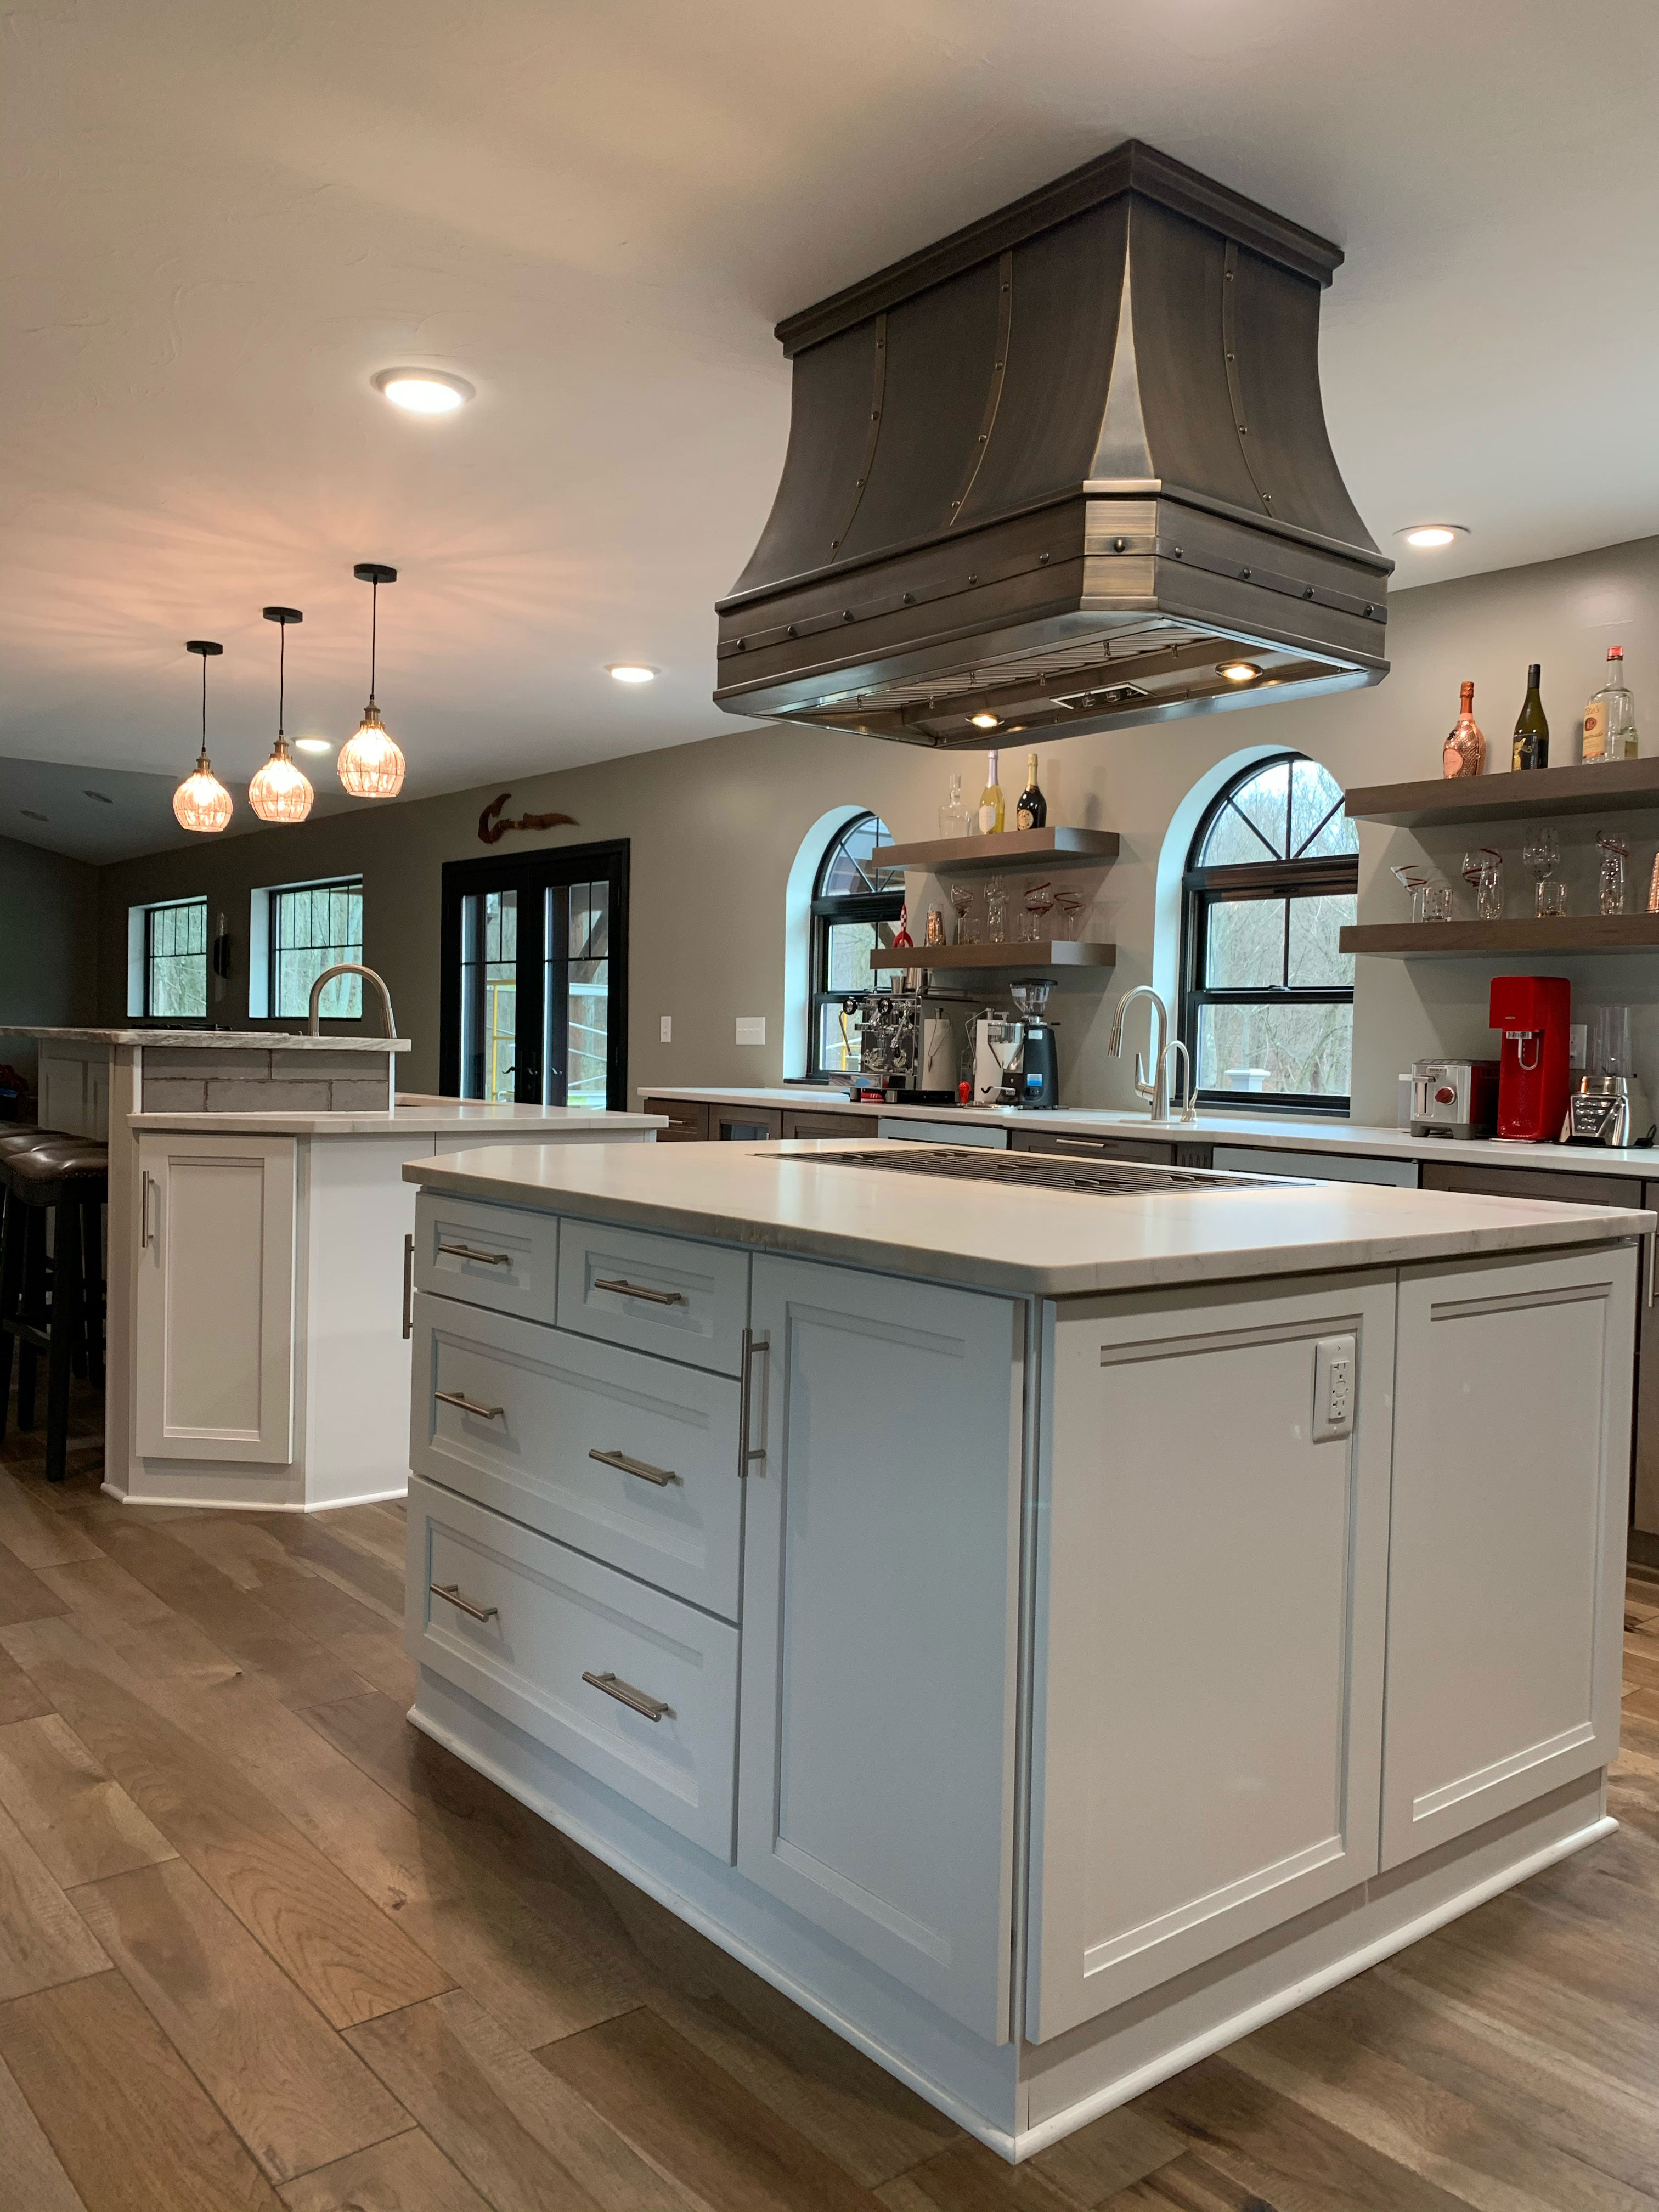 Embrace french kitchen design by white cabinets, marble countertops, captivating brick backsplash,ra with range hood